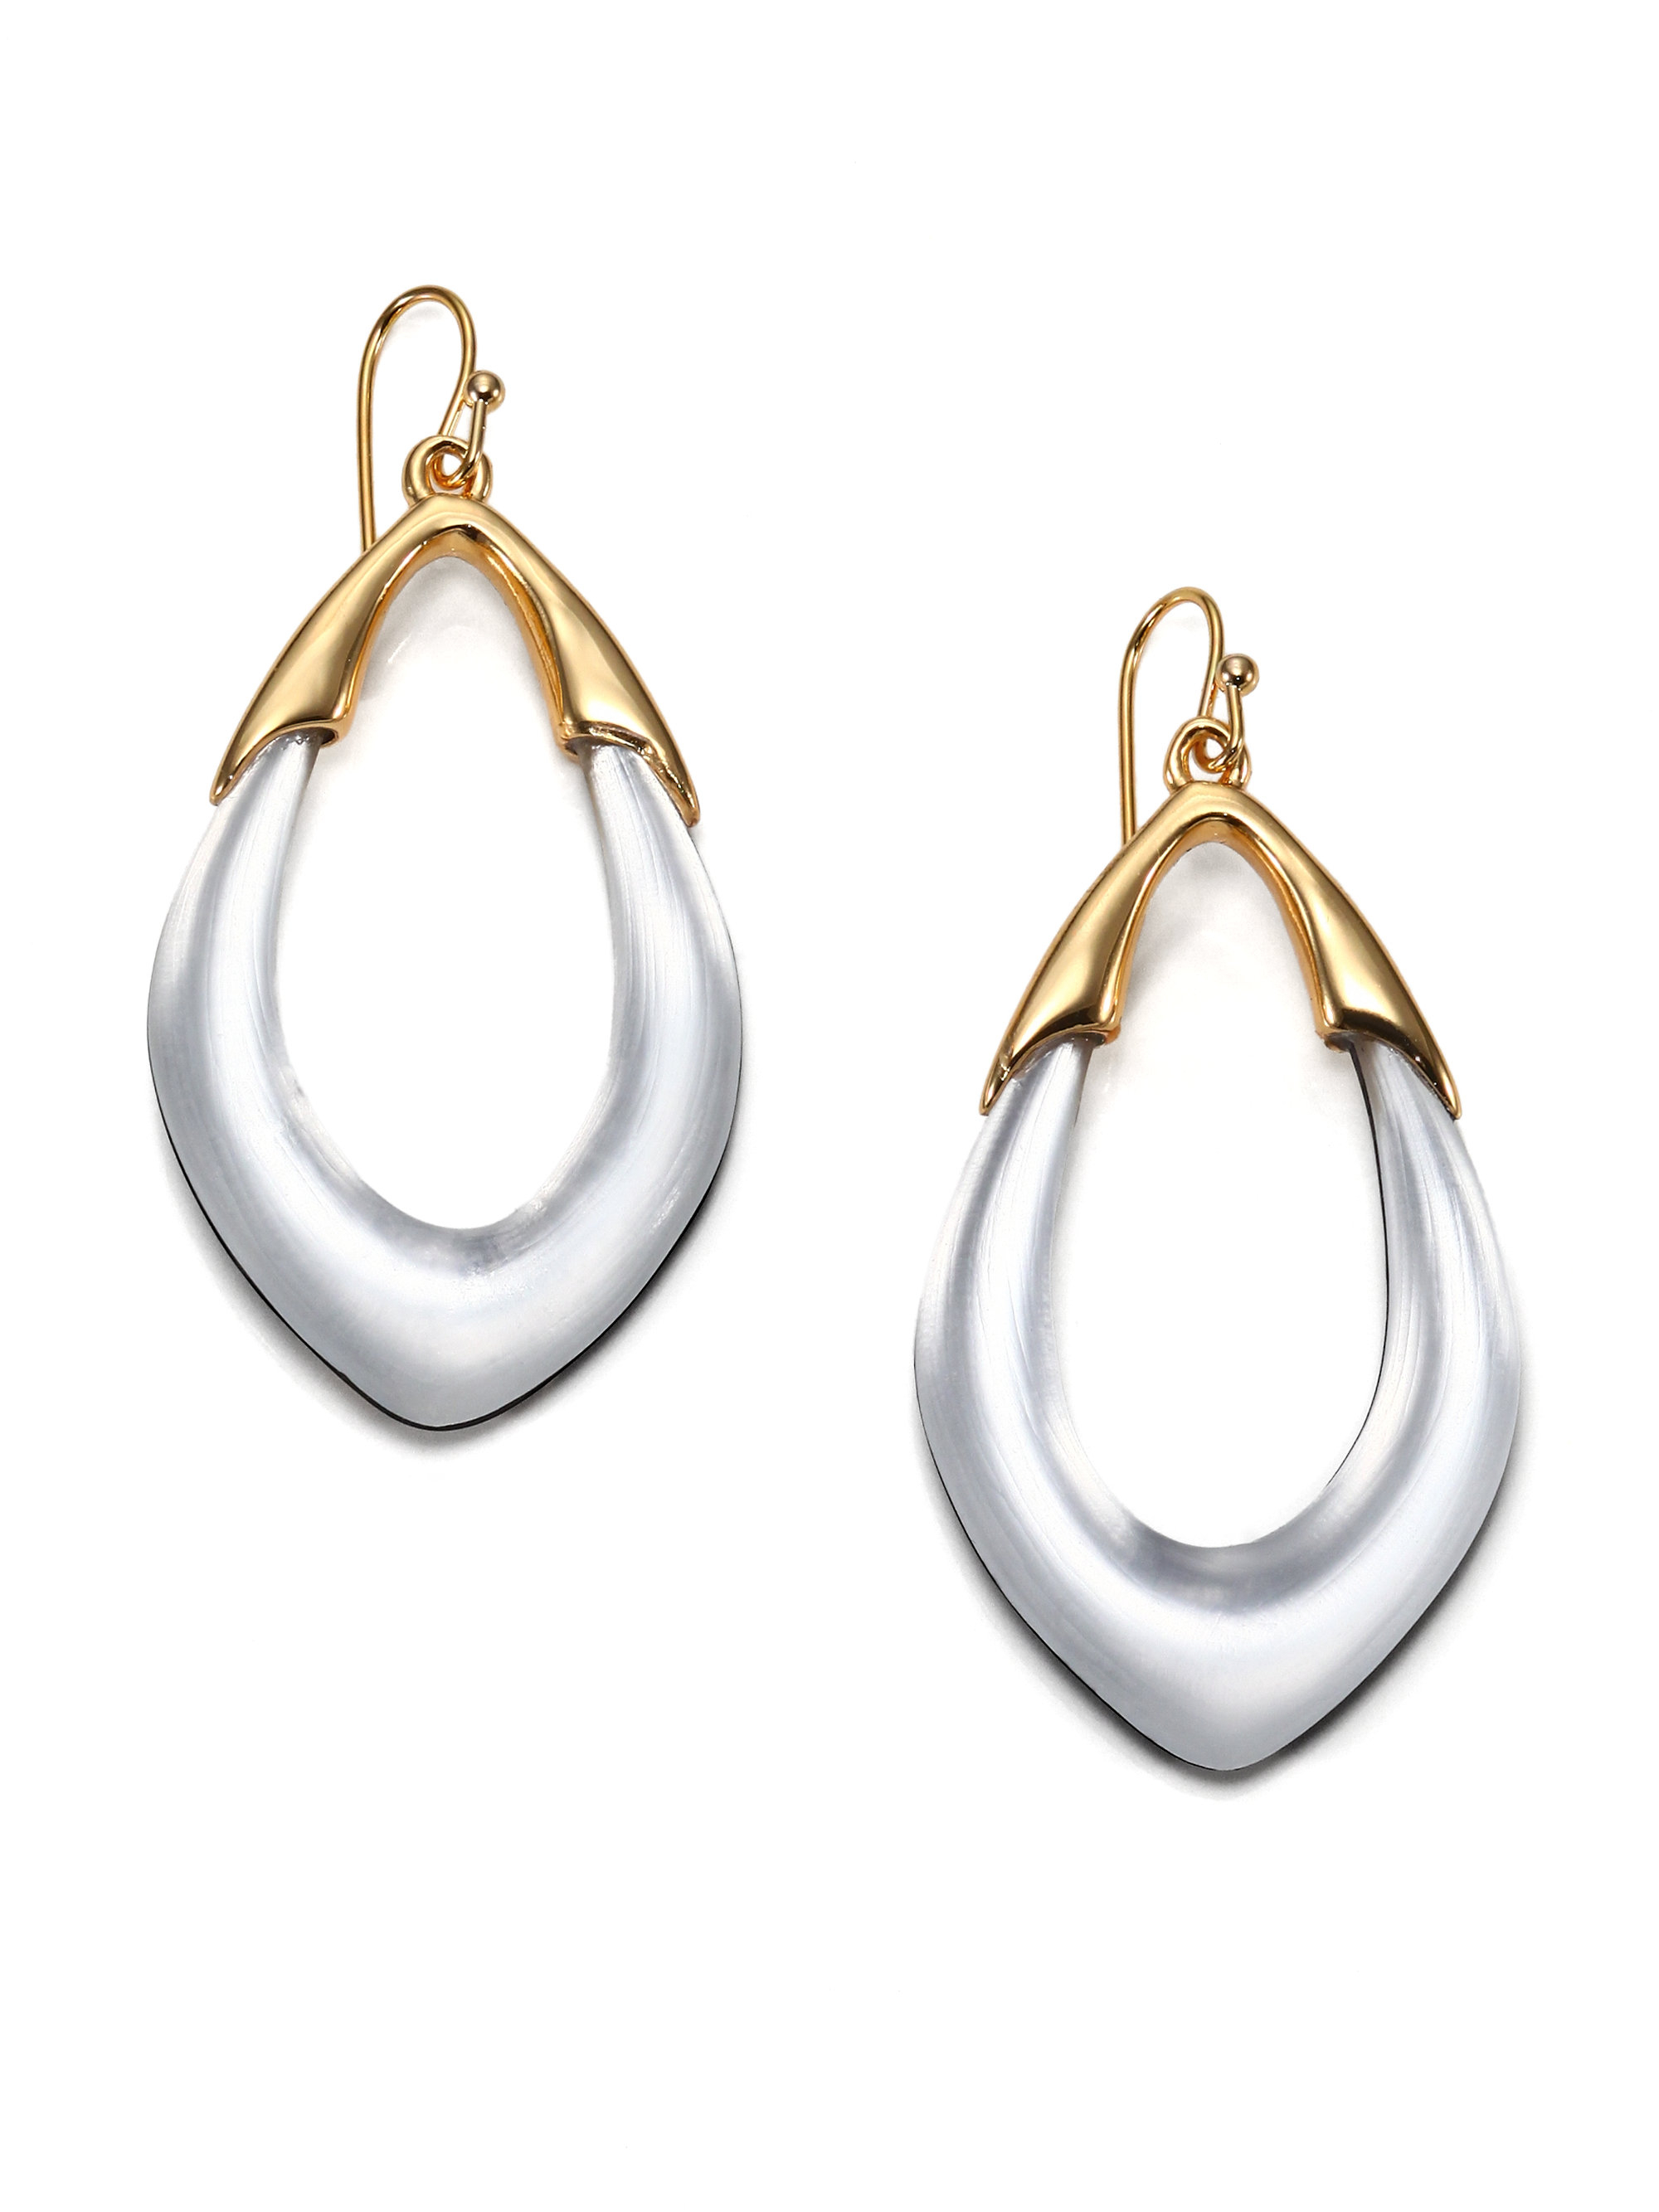 Alexis Bittar Drop Earrings Flash Sales, 51% OFF | www.pegasusaerogroup.com